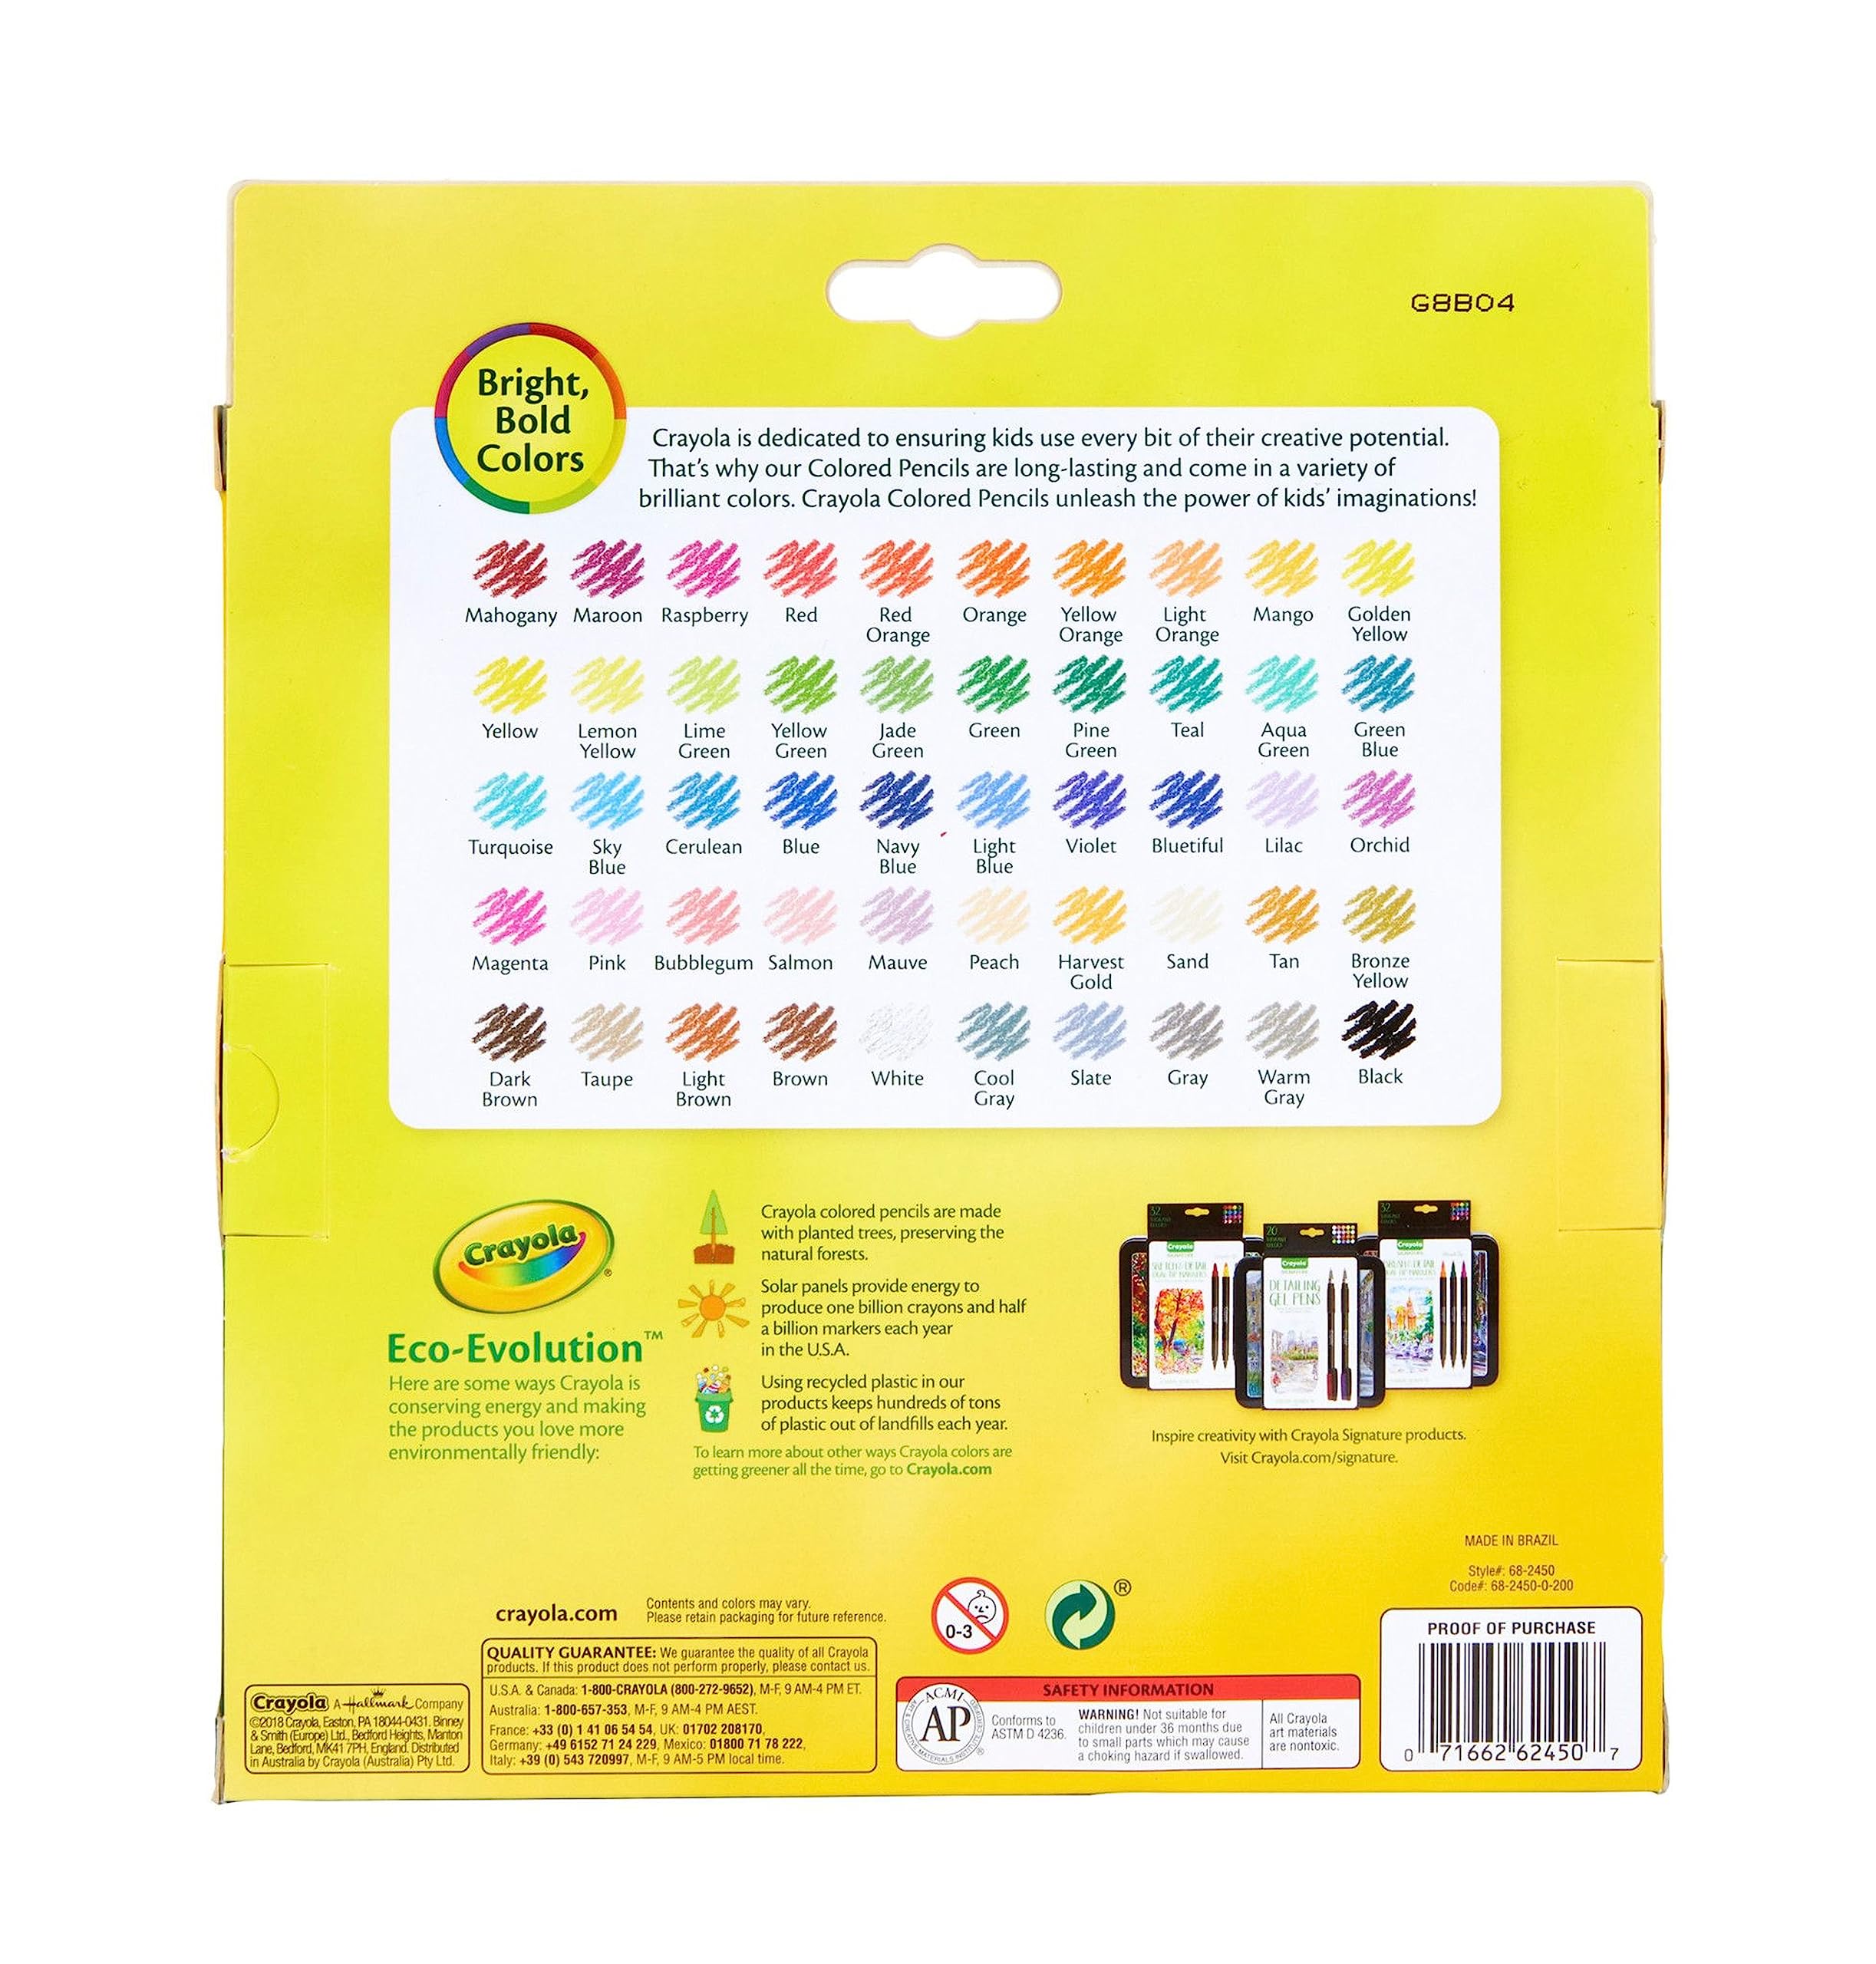 Crayola Erasable Colored Pencils (50ct), Kids Colored Pencils, Bulk School Supplies for Teachers, Great for Classrooms, 6+ [Amazon Exclusive]